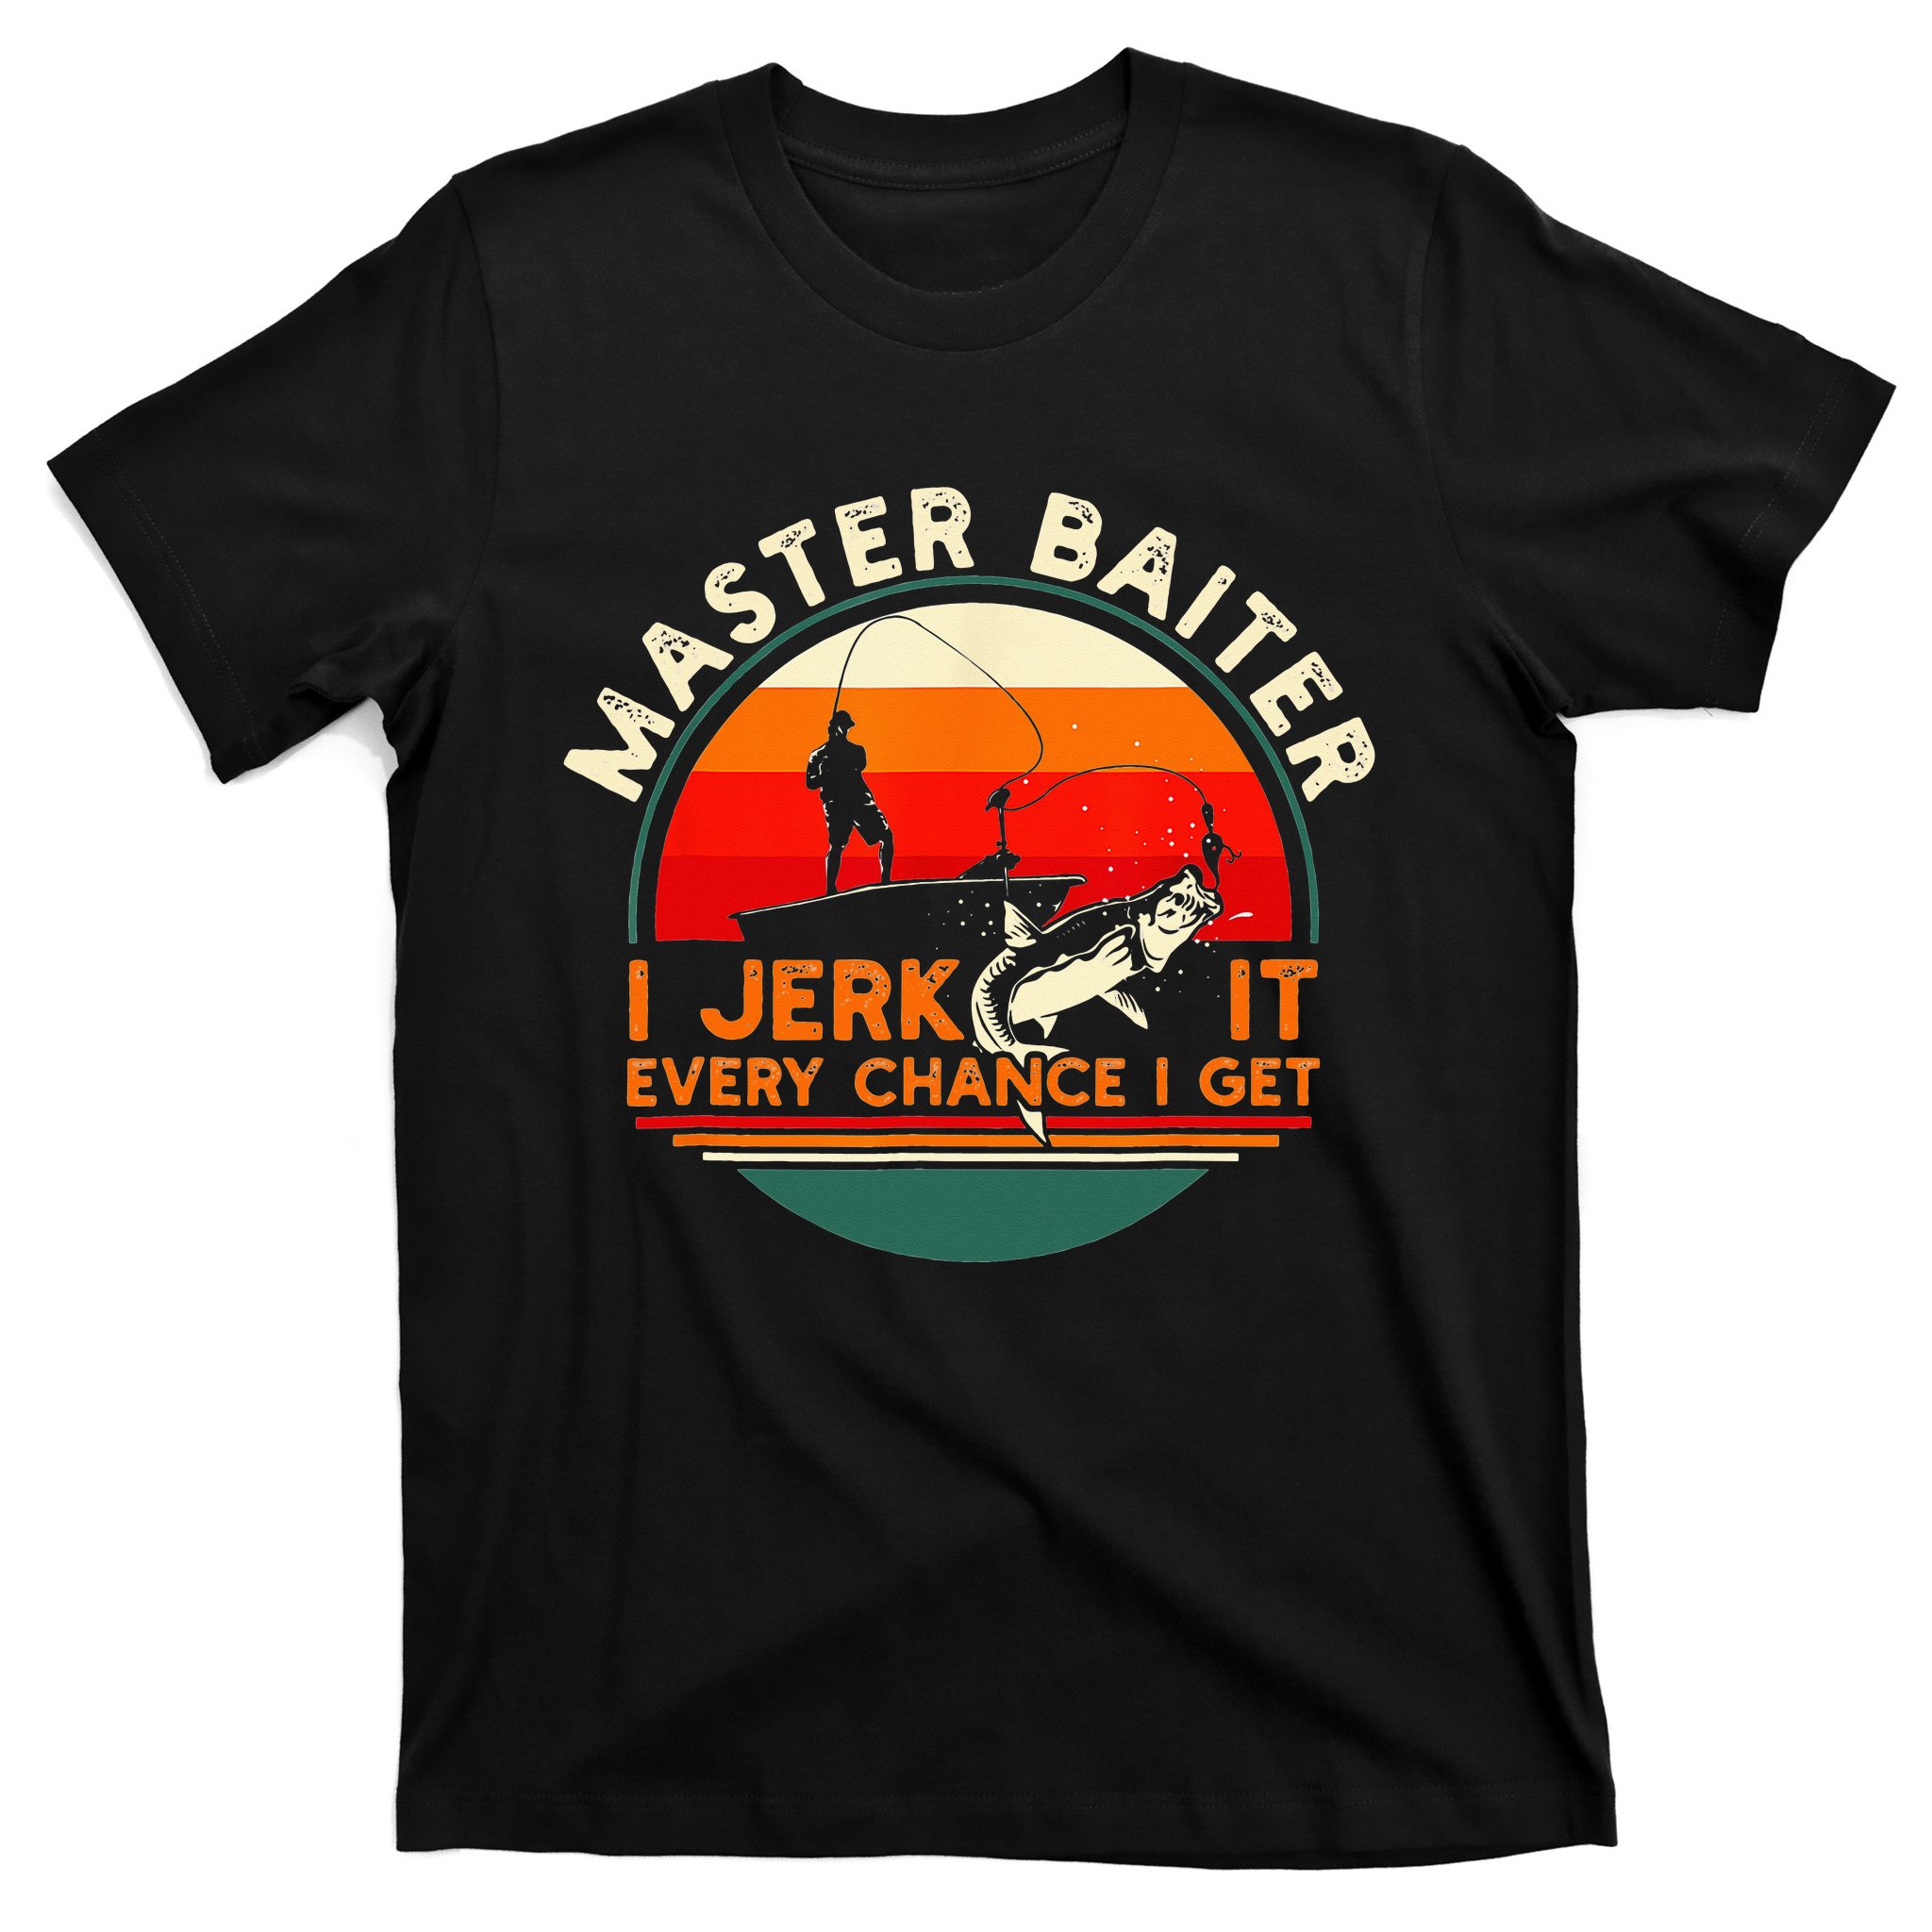 Master Baiter Shirt 2XL / Black